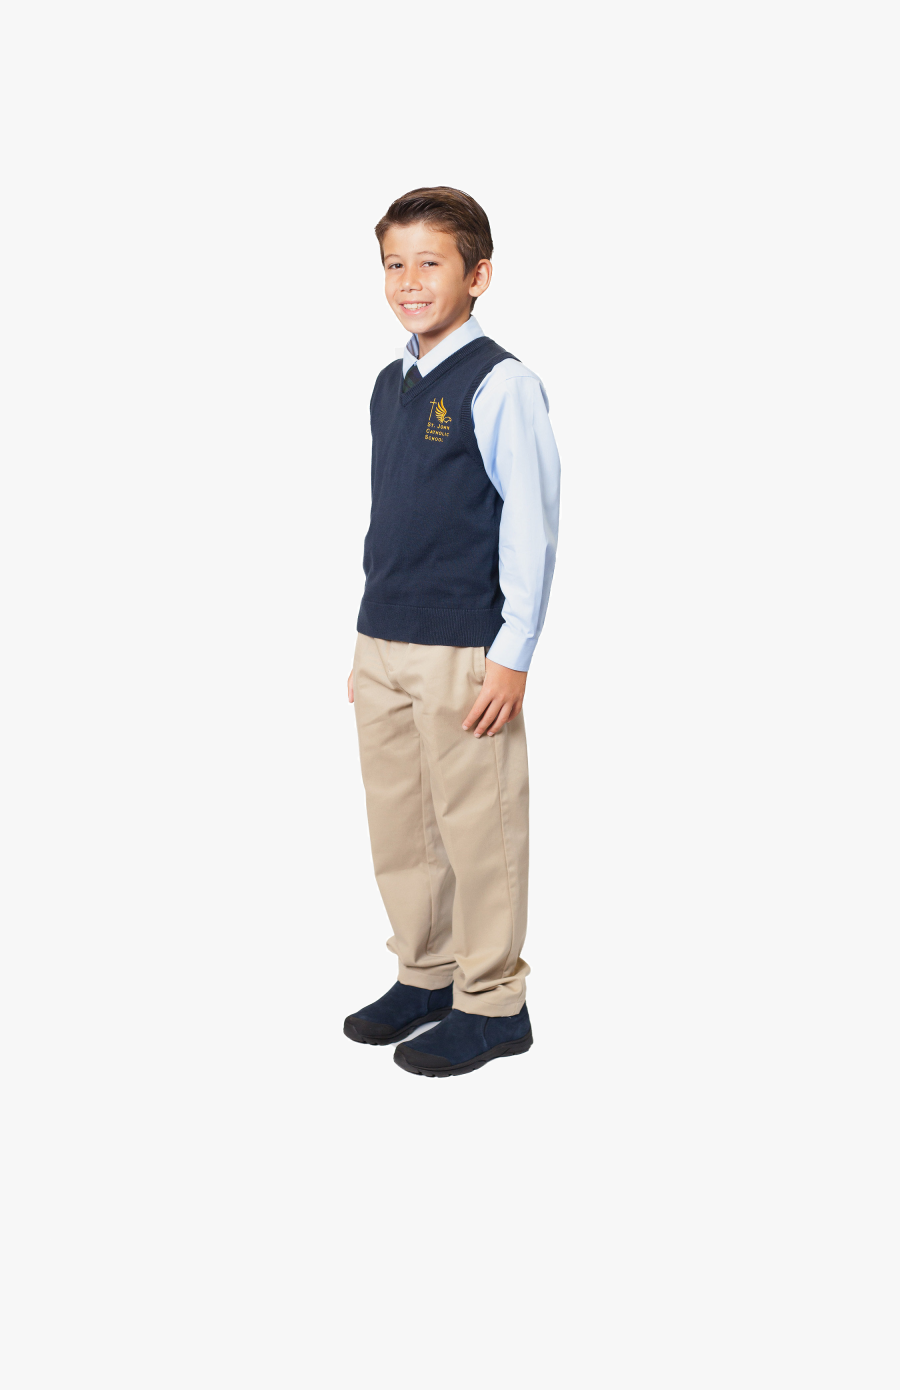 Boy At School Png Transparent Boy At School Images - Catholic School Boy Uniform, Transparent Clipart